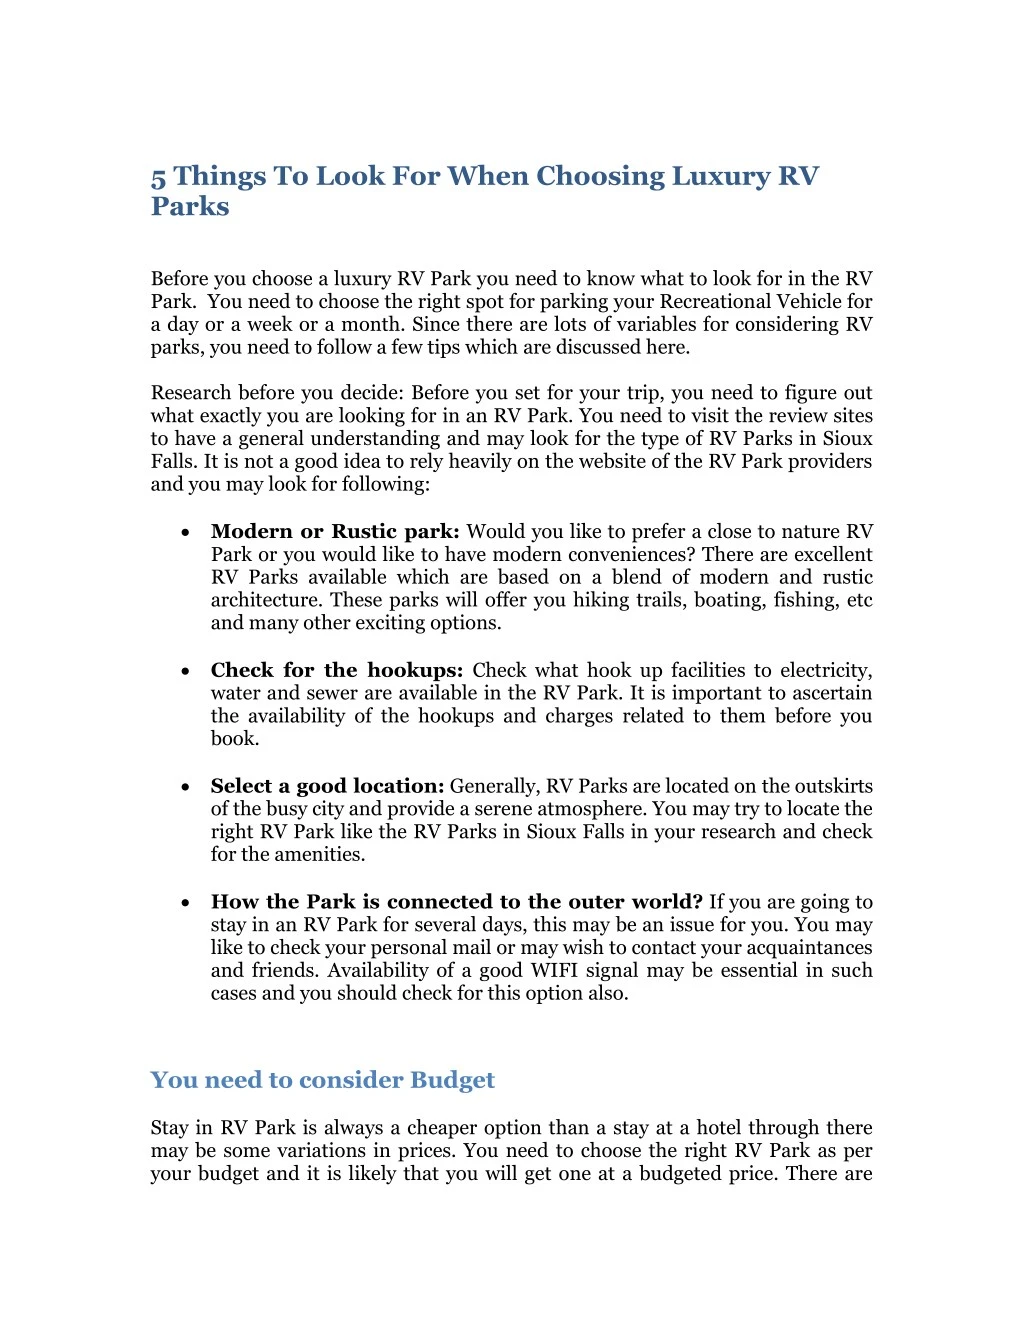 5 things to look for when choosing luxury